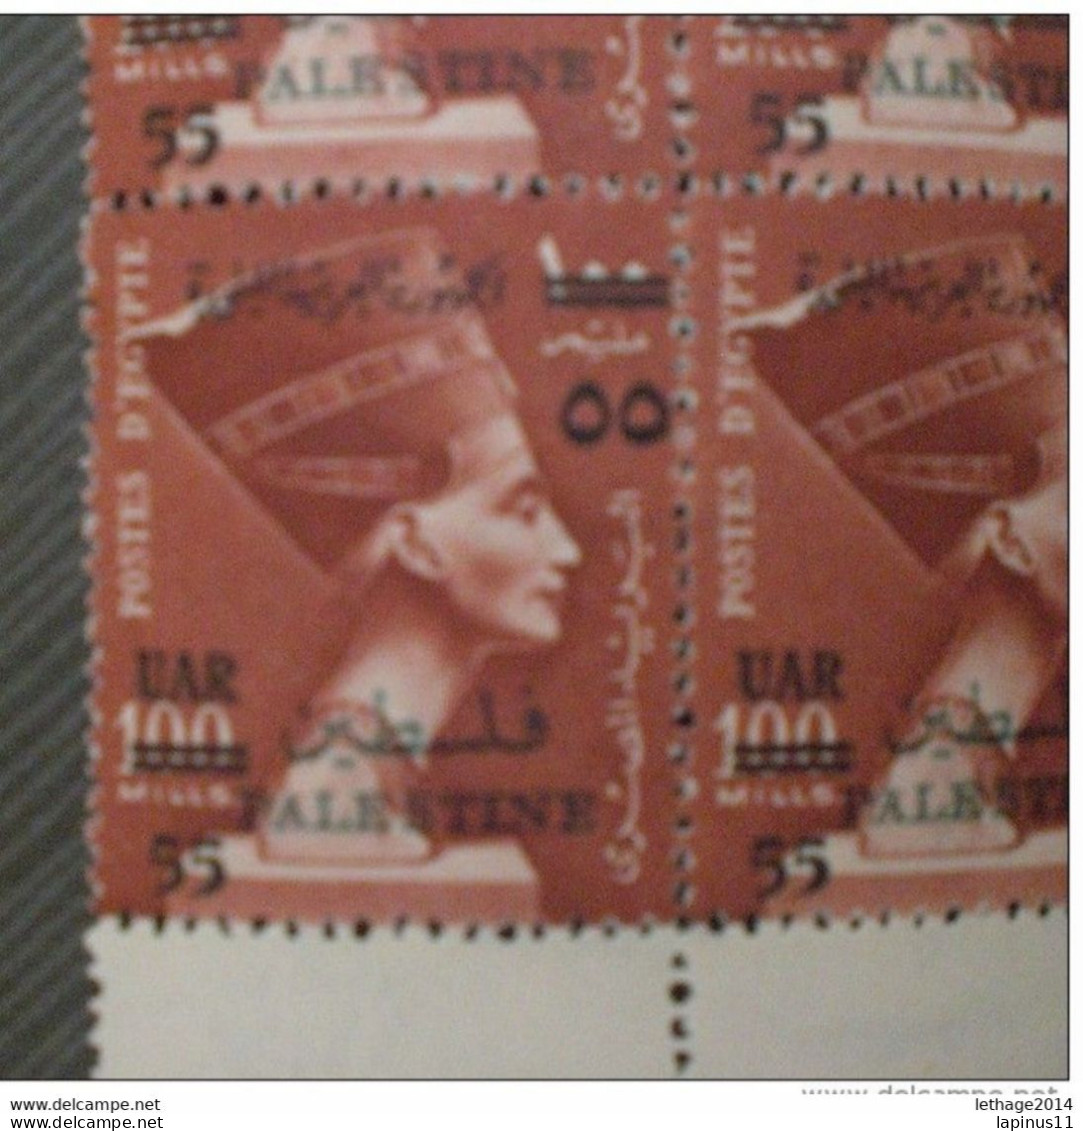 EGITTO EGYPT EGYPTE PALESTINE 1959 Queen Nefertiti UAR Postage Stamps Overprinted "PALESTINE" In English And Arabic MNH - Neufs